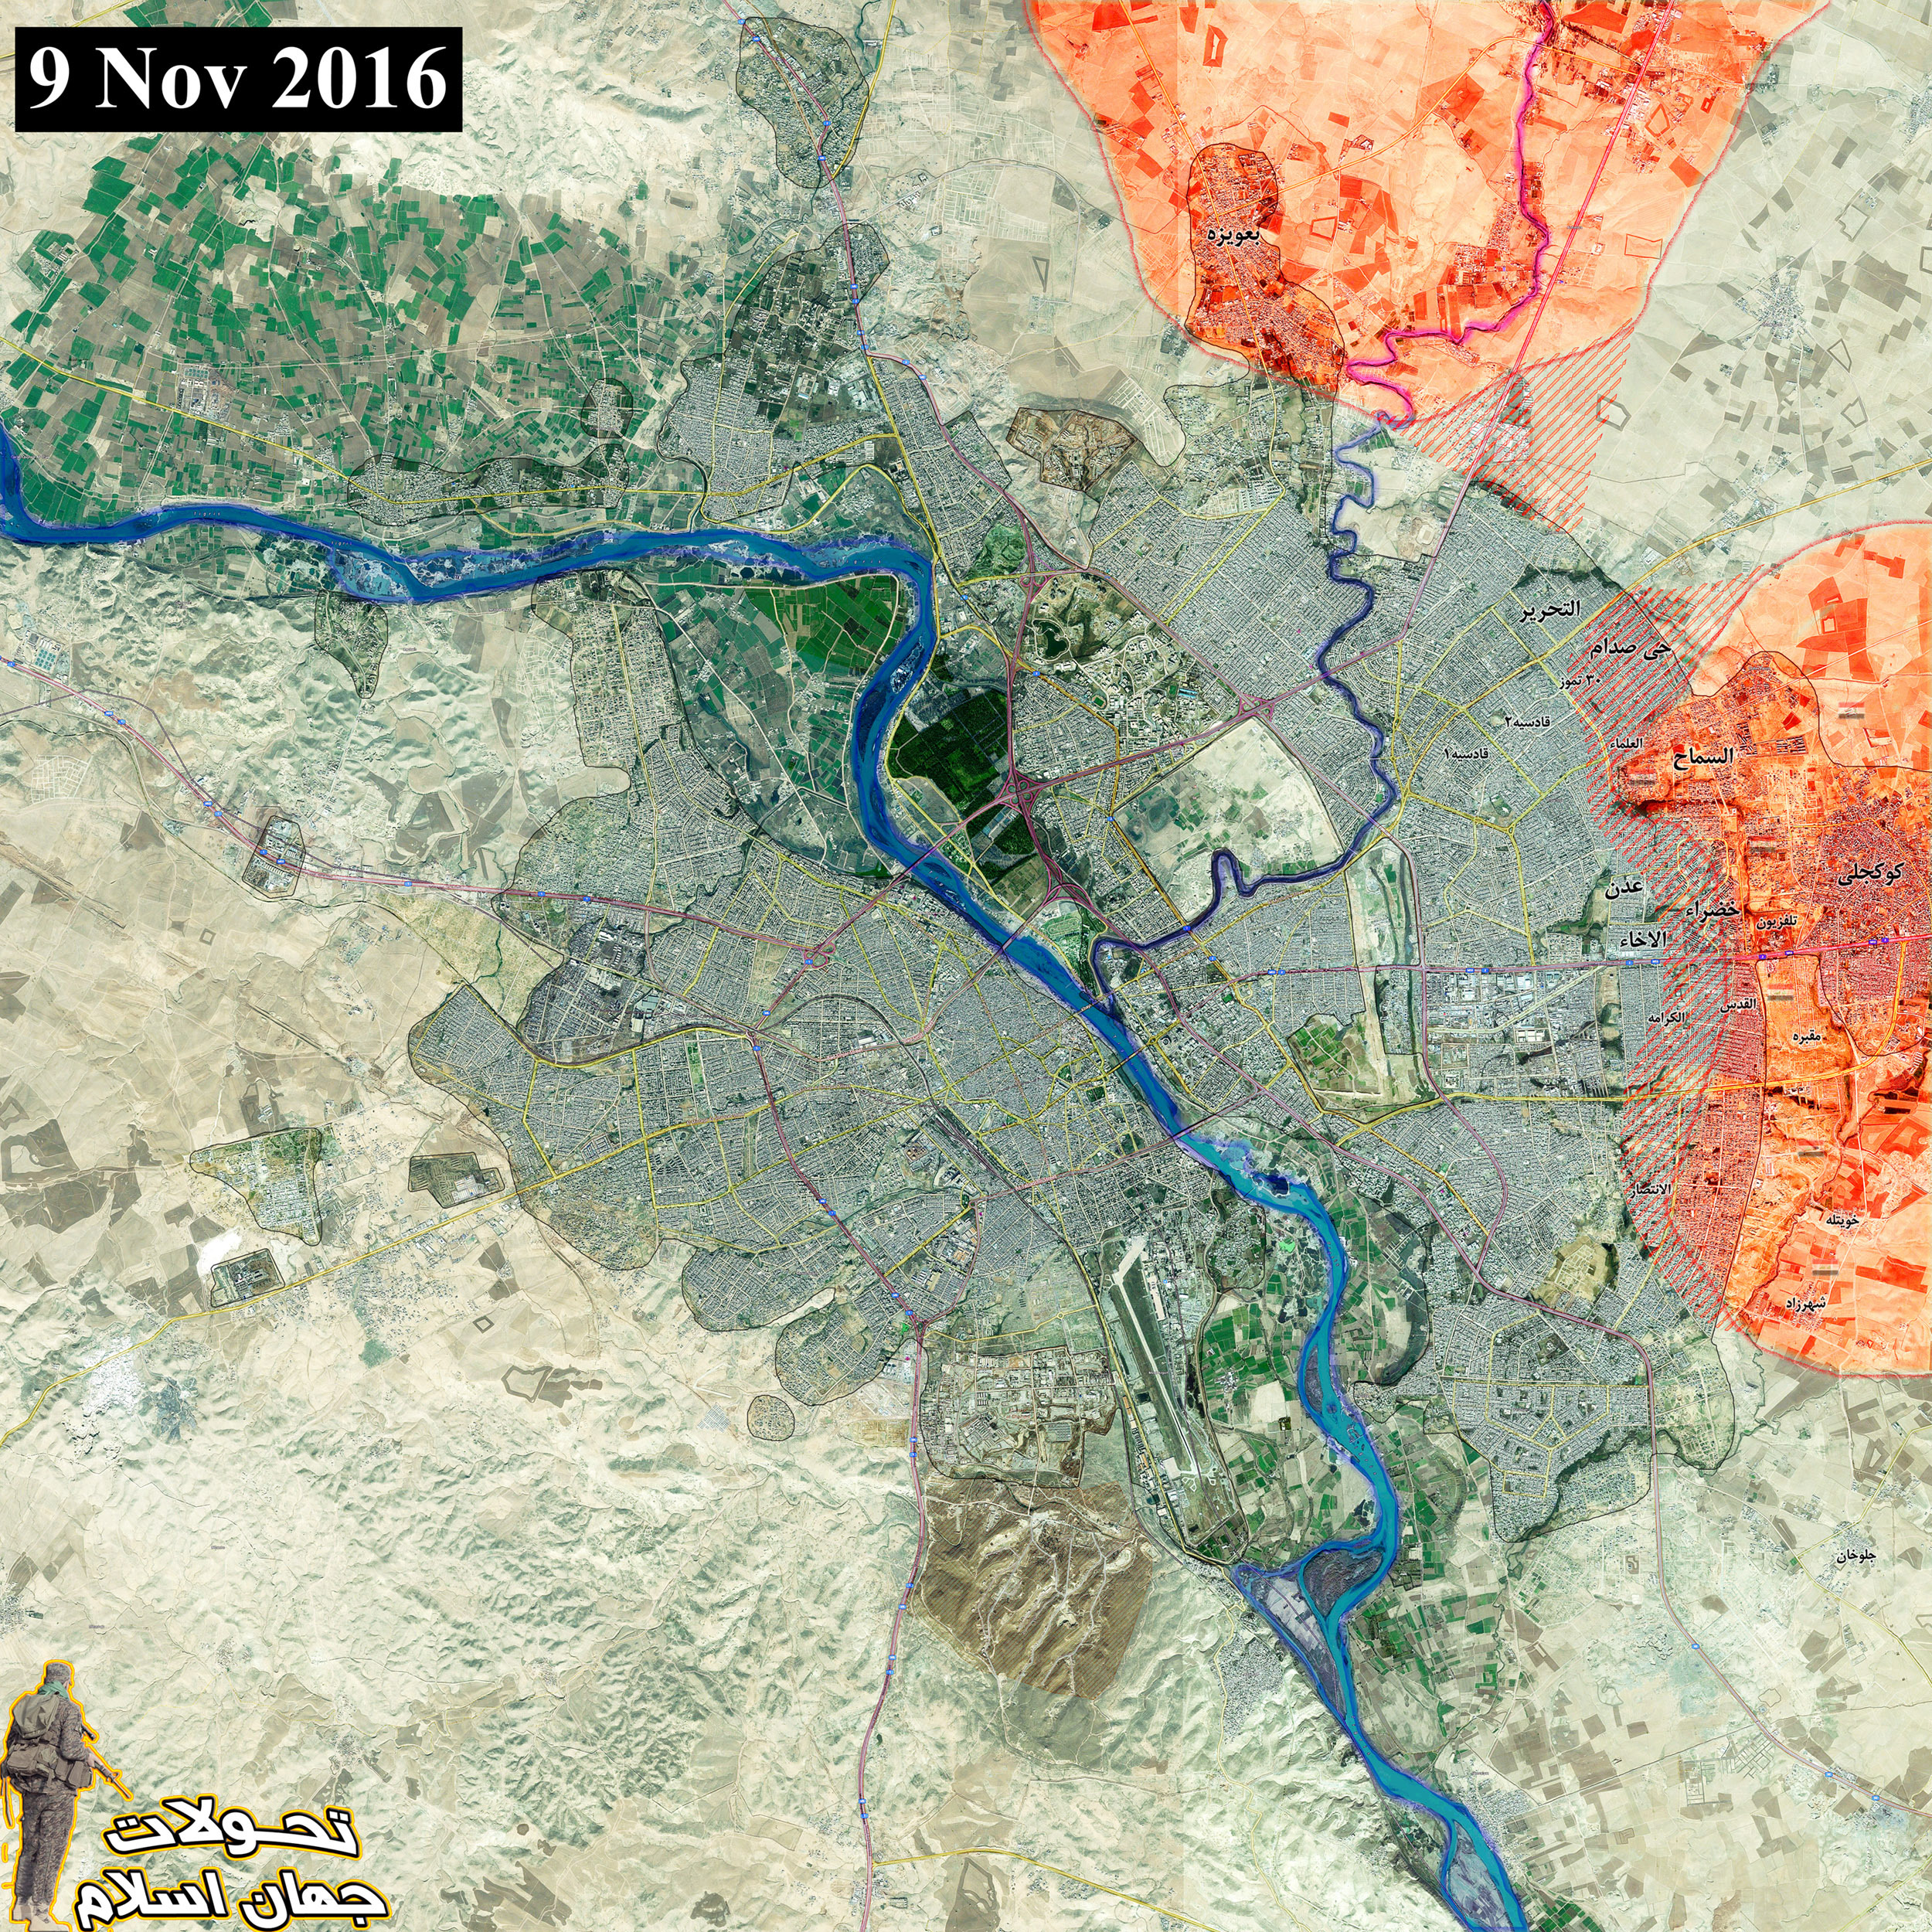 Battle for Mosul on November 10, 2016